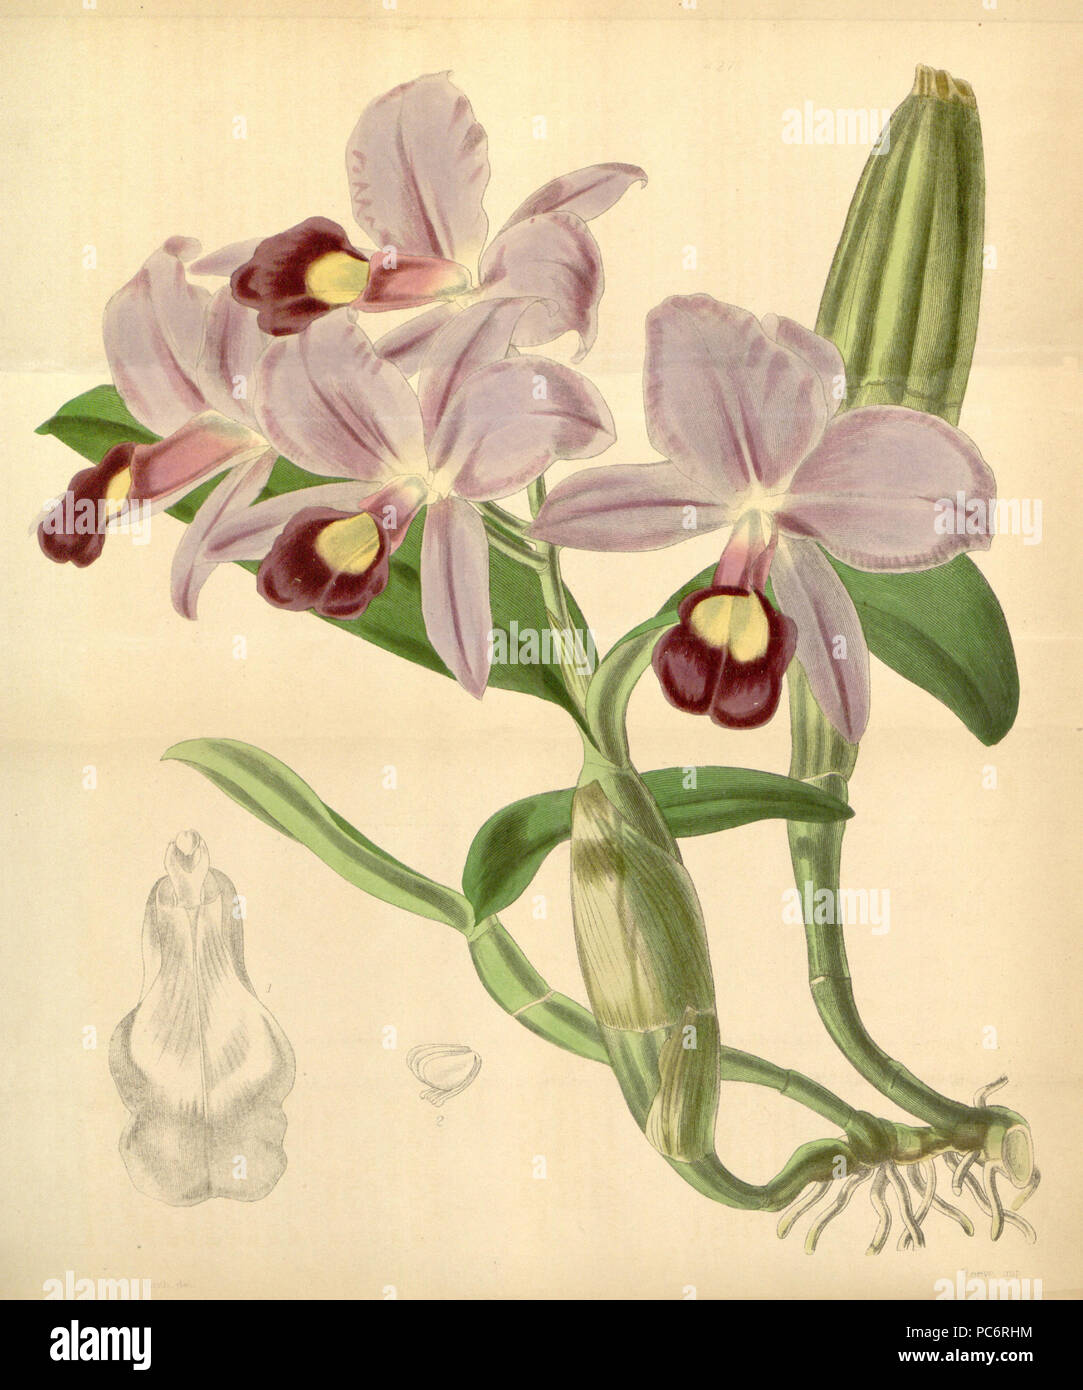 256 Guarianthe skinneri (come Cattleya skinneri) - Curtis' 72 (Ser. 3 no. 2) pl. 4270 (1846) Foto Stock